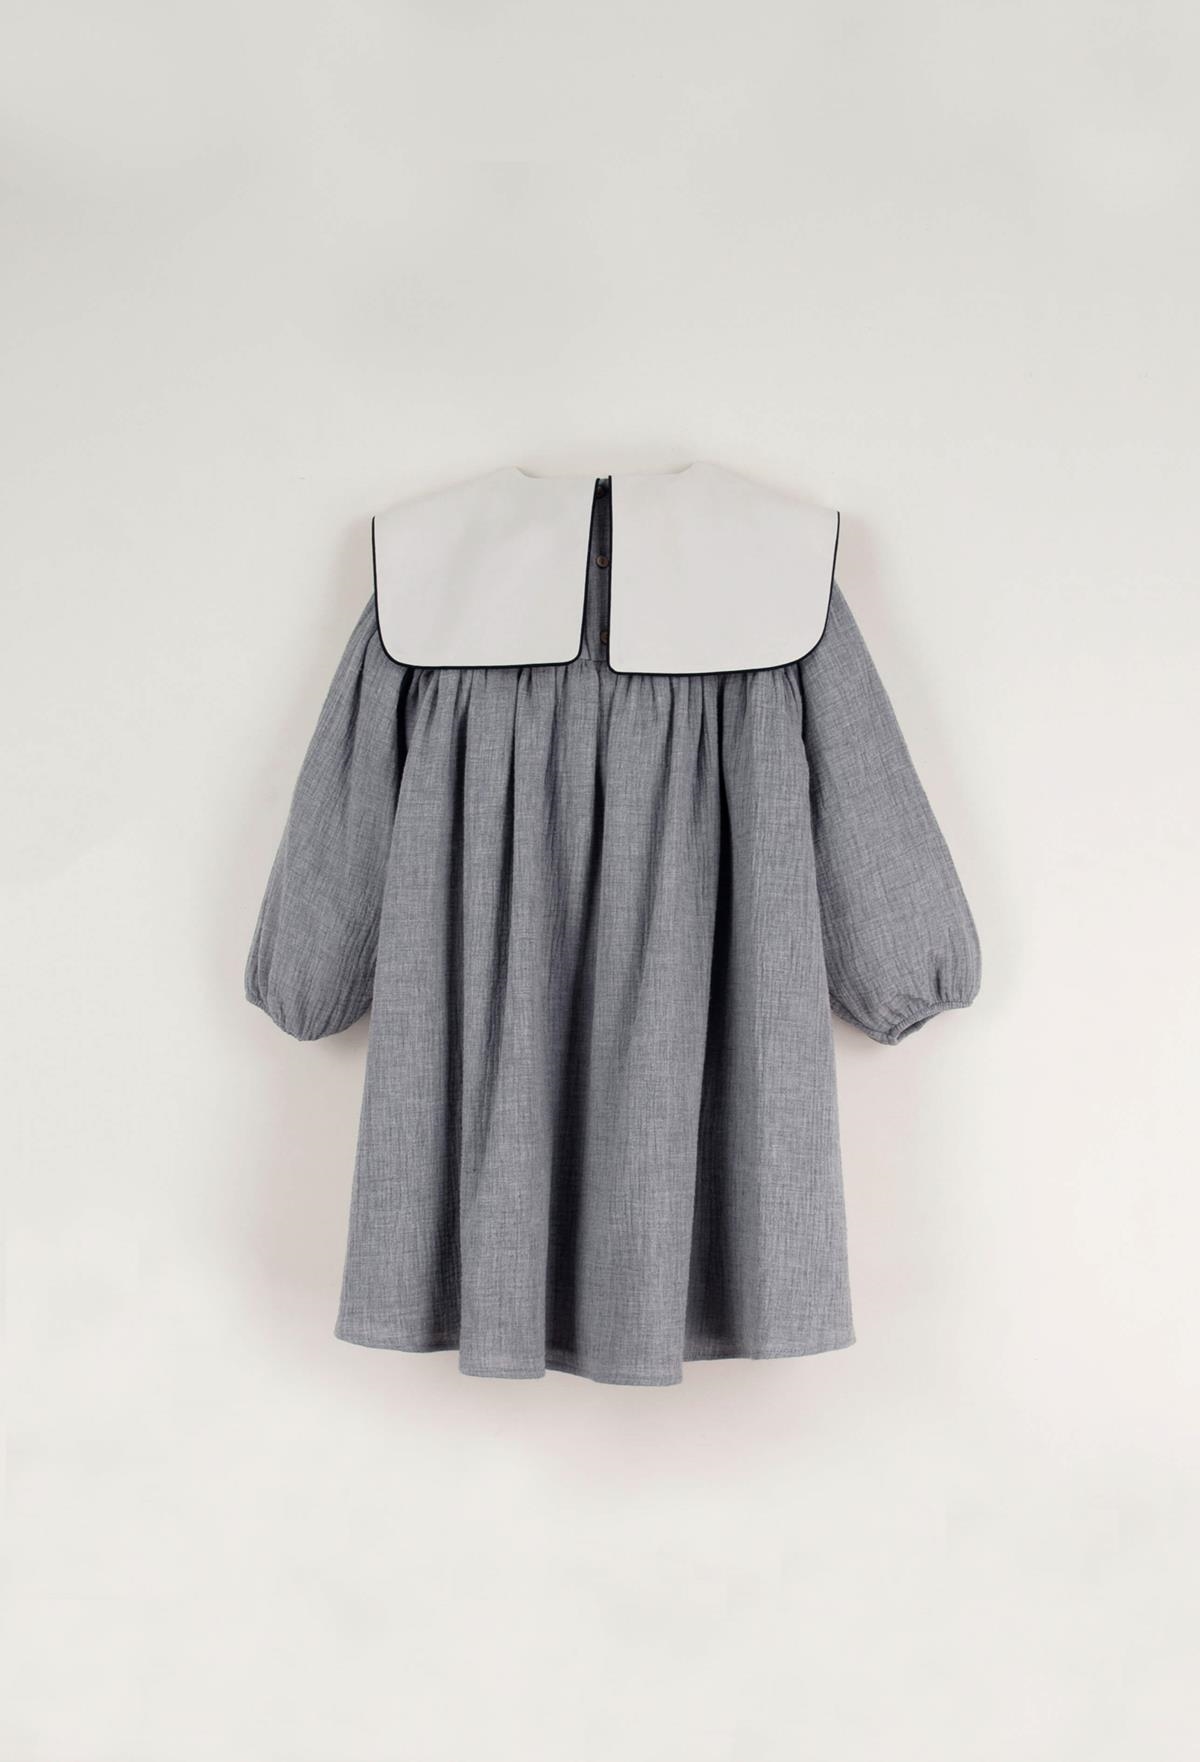 Mod.31.4 Light grey dress in organic fabric with embroidered yoke | AW22.23 Mod.31.4 Light grey dress in organic fabric with embroidered yoke